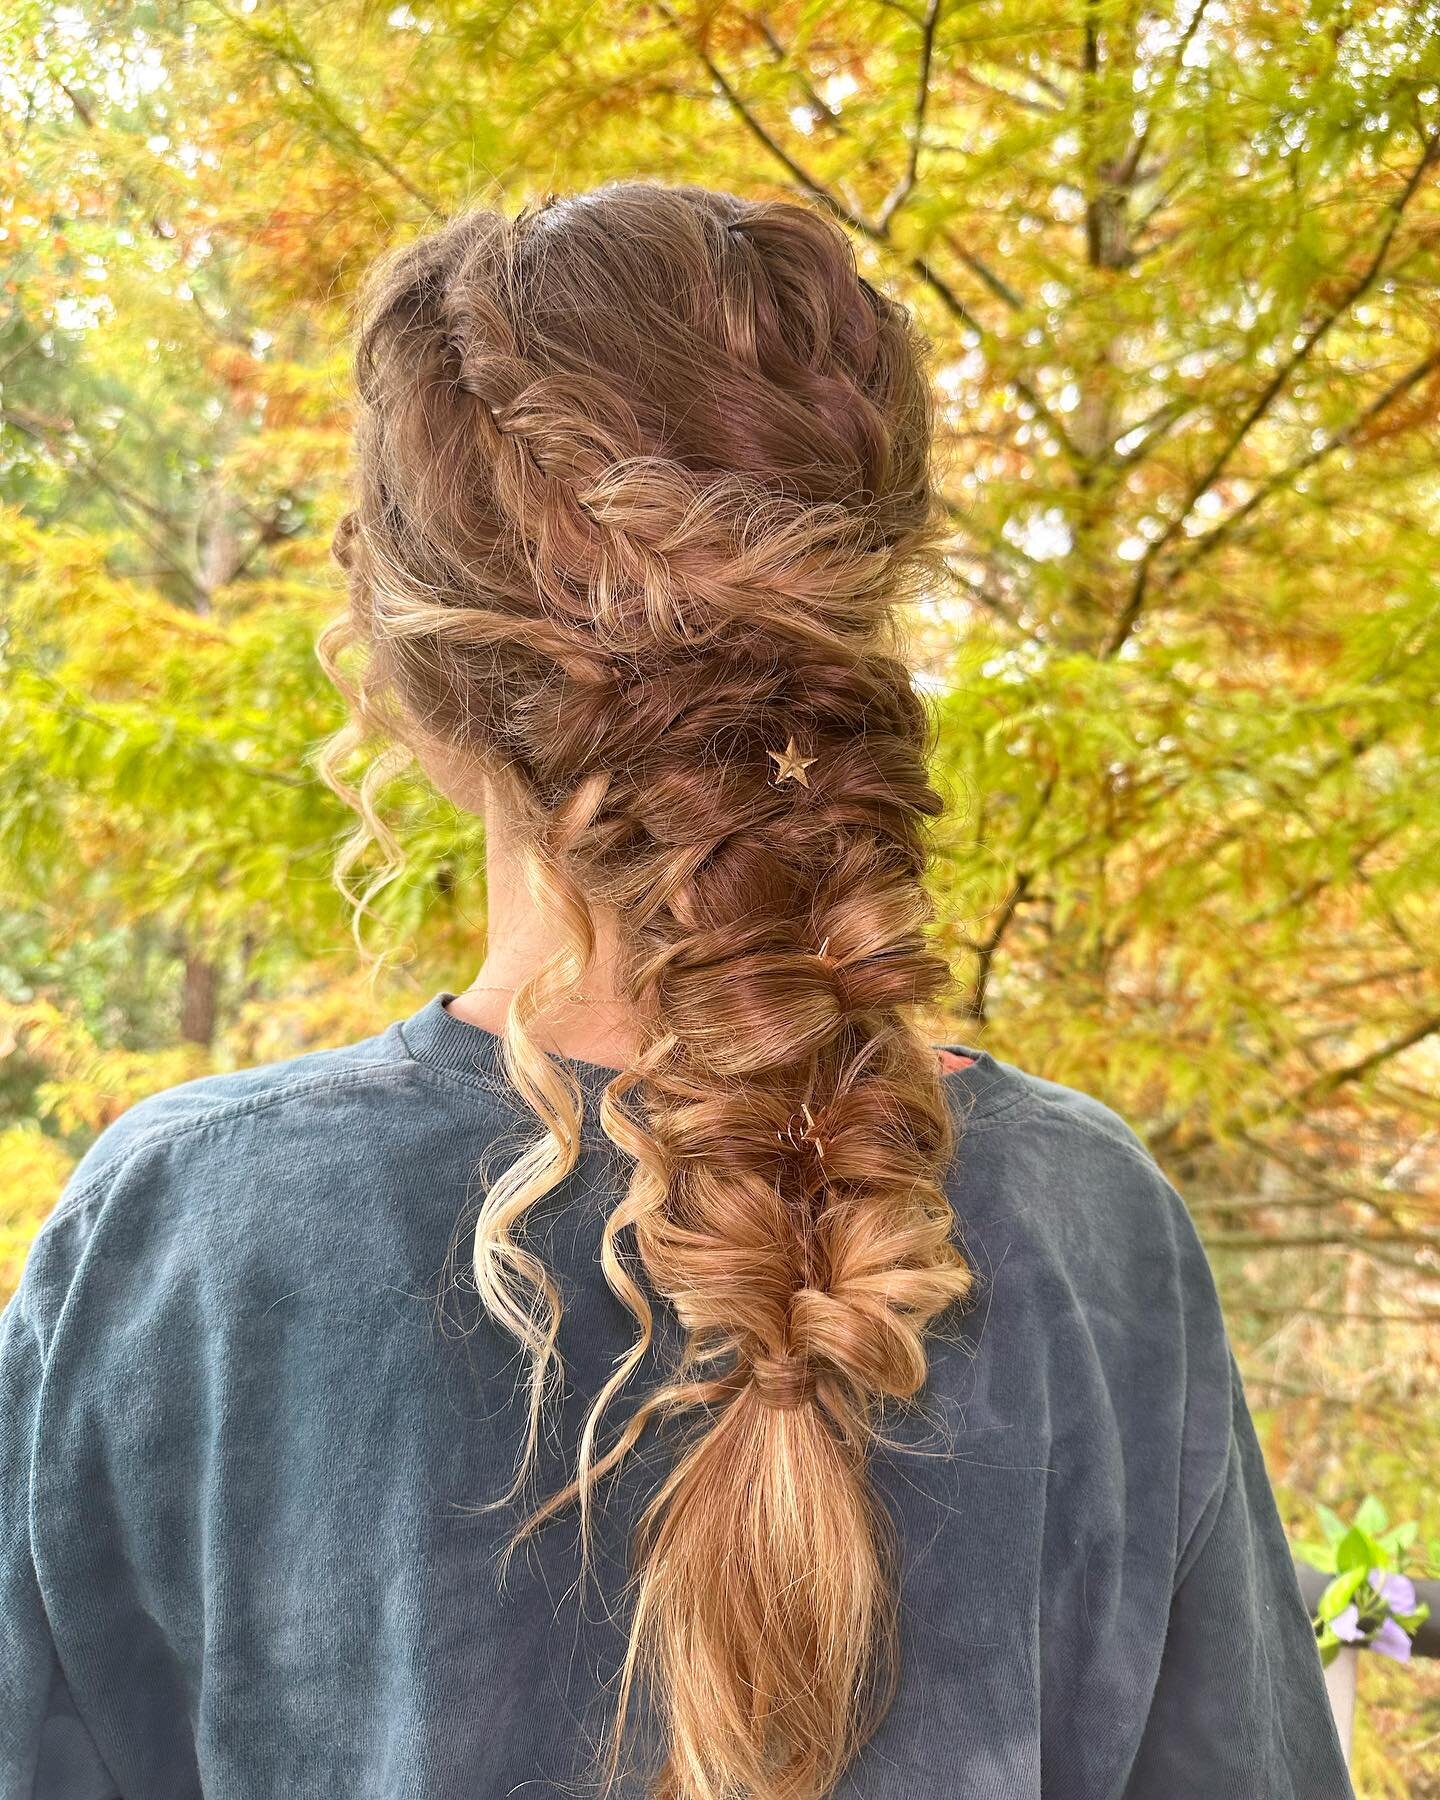 ✨Boho braids are my fave 🥰